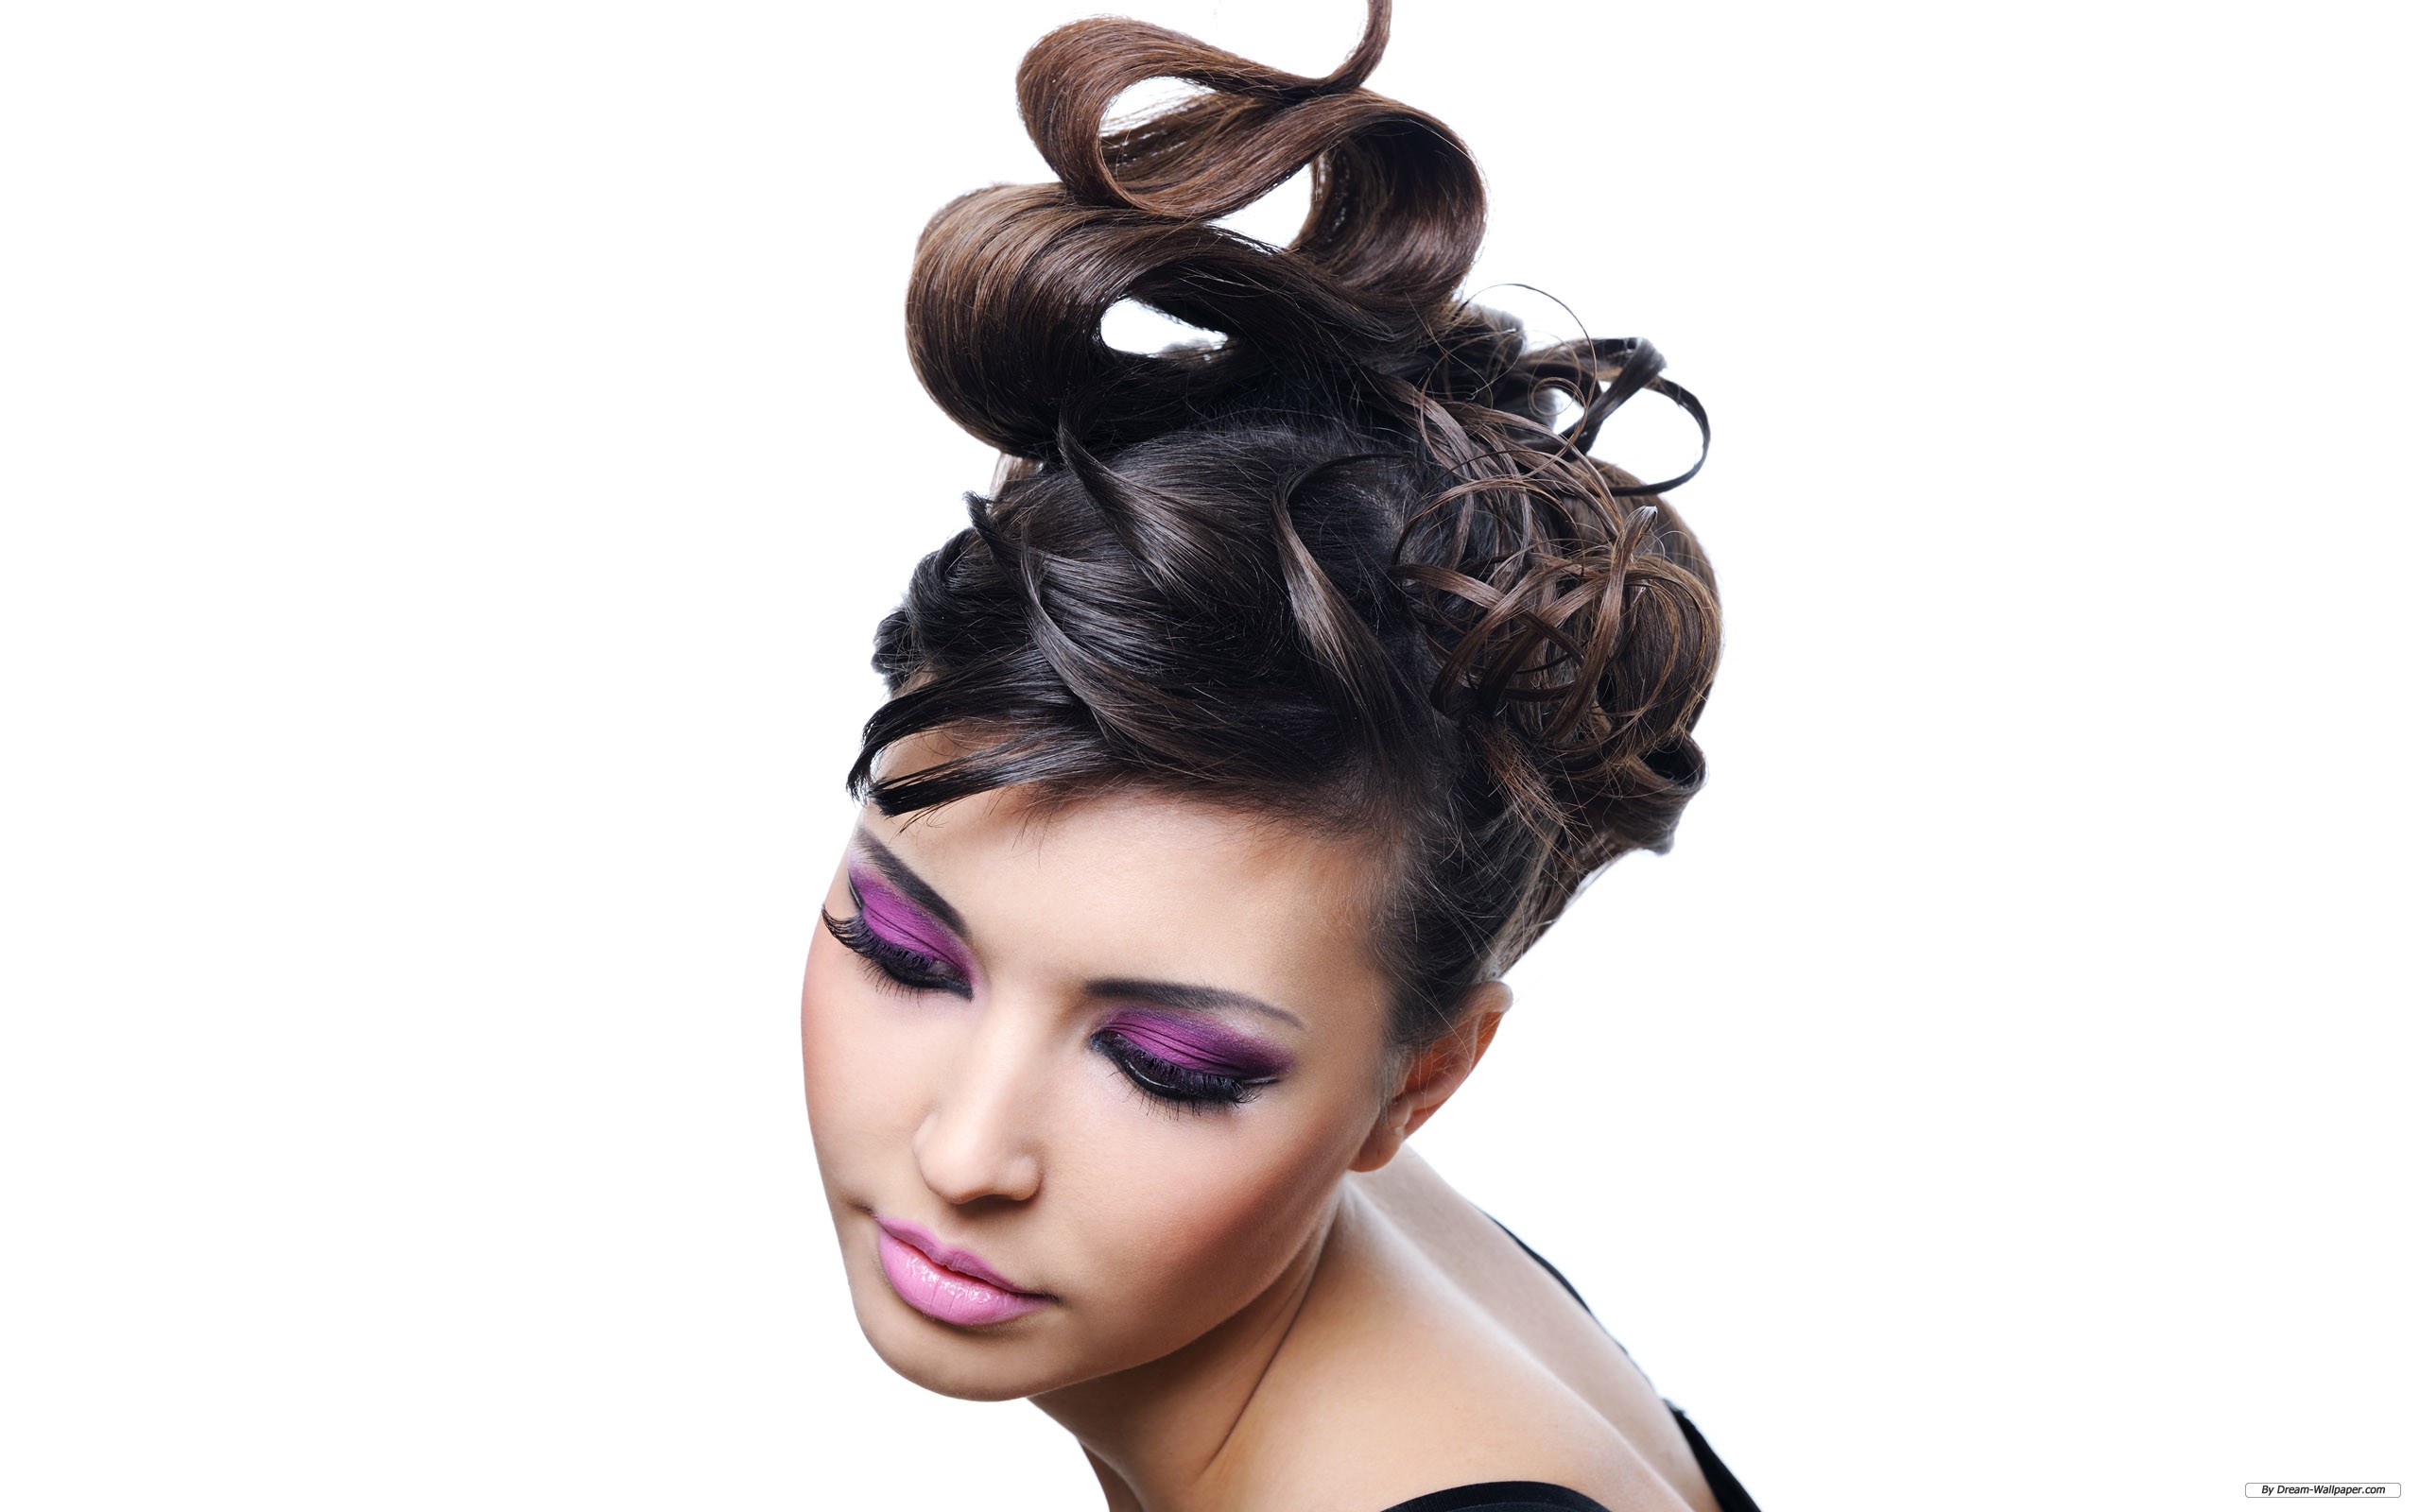 Free Wallpaper - Free Photography wallpaper - Women Hairstyle 1